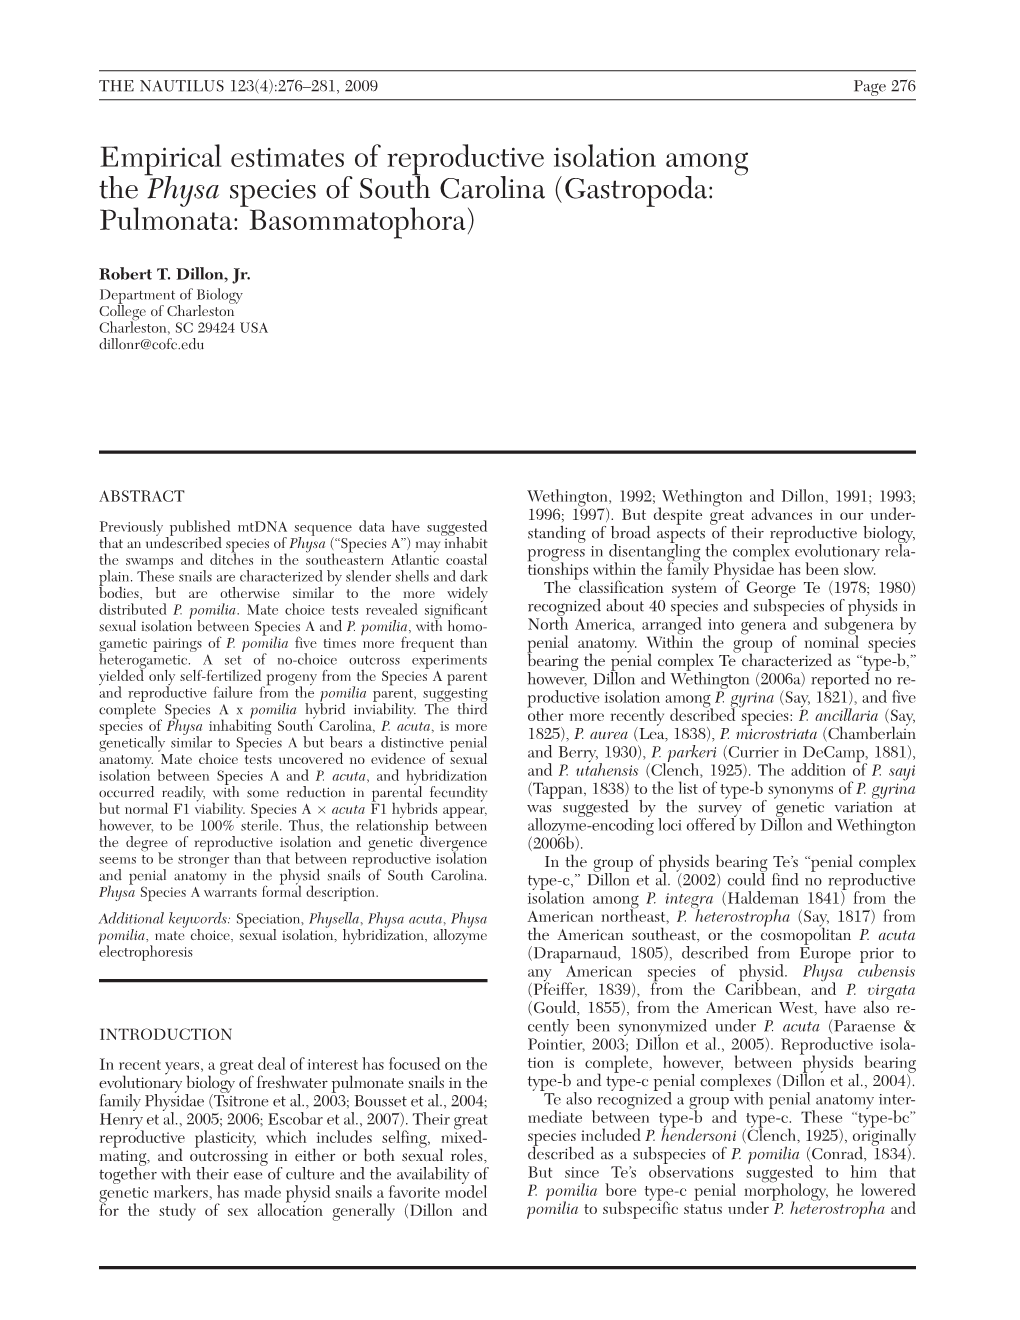 Empirical Estimates of Reproductive Isolation Among the Physa Species of South Carolina (Gastropoda: Pulmonata: Basommatophora)